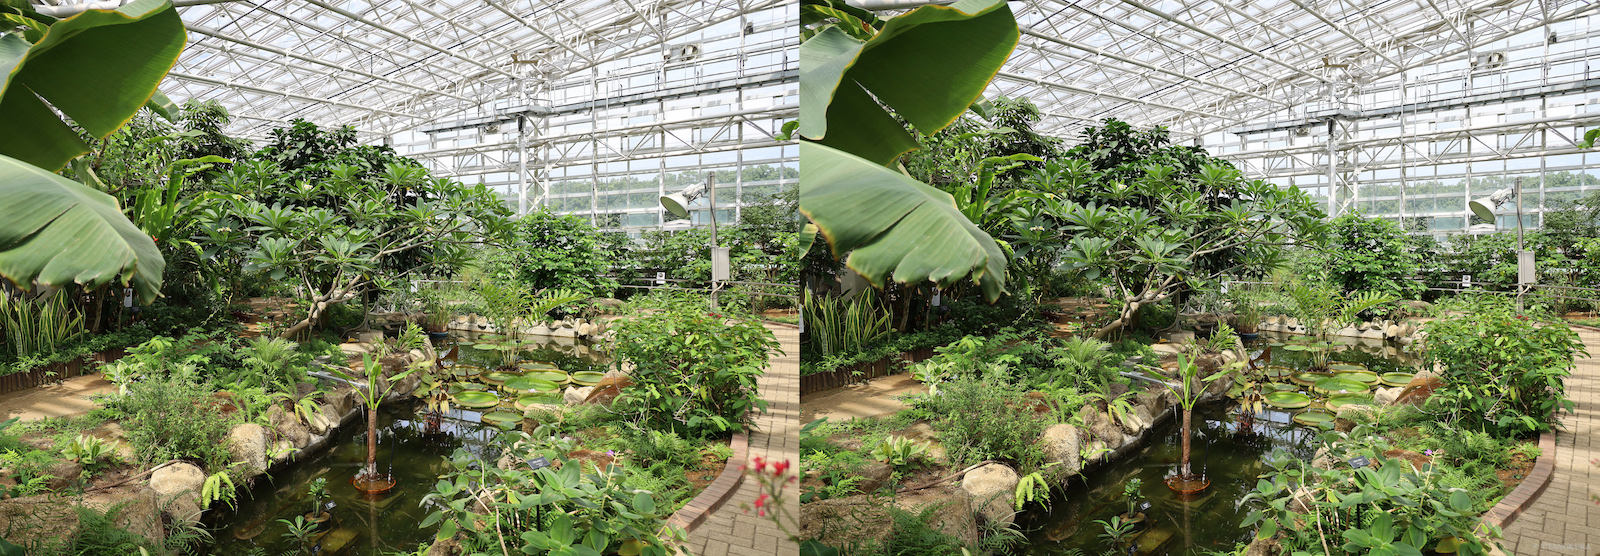 3d 神代植物公園 大温室 熱帯花木室 発想法 情報処理と問題解決